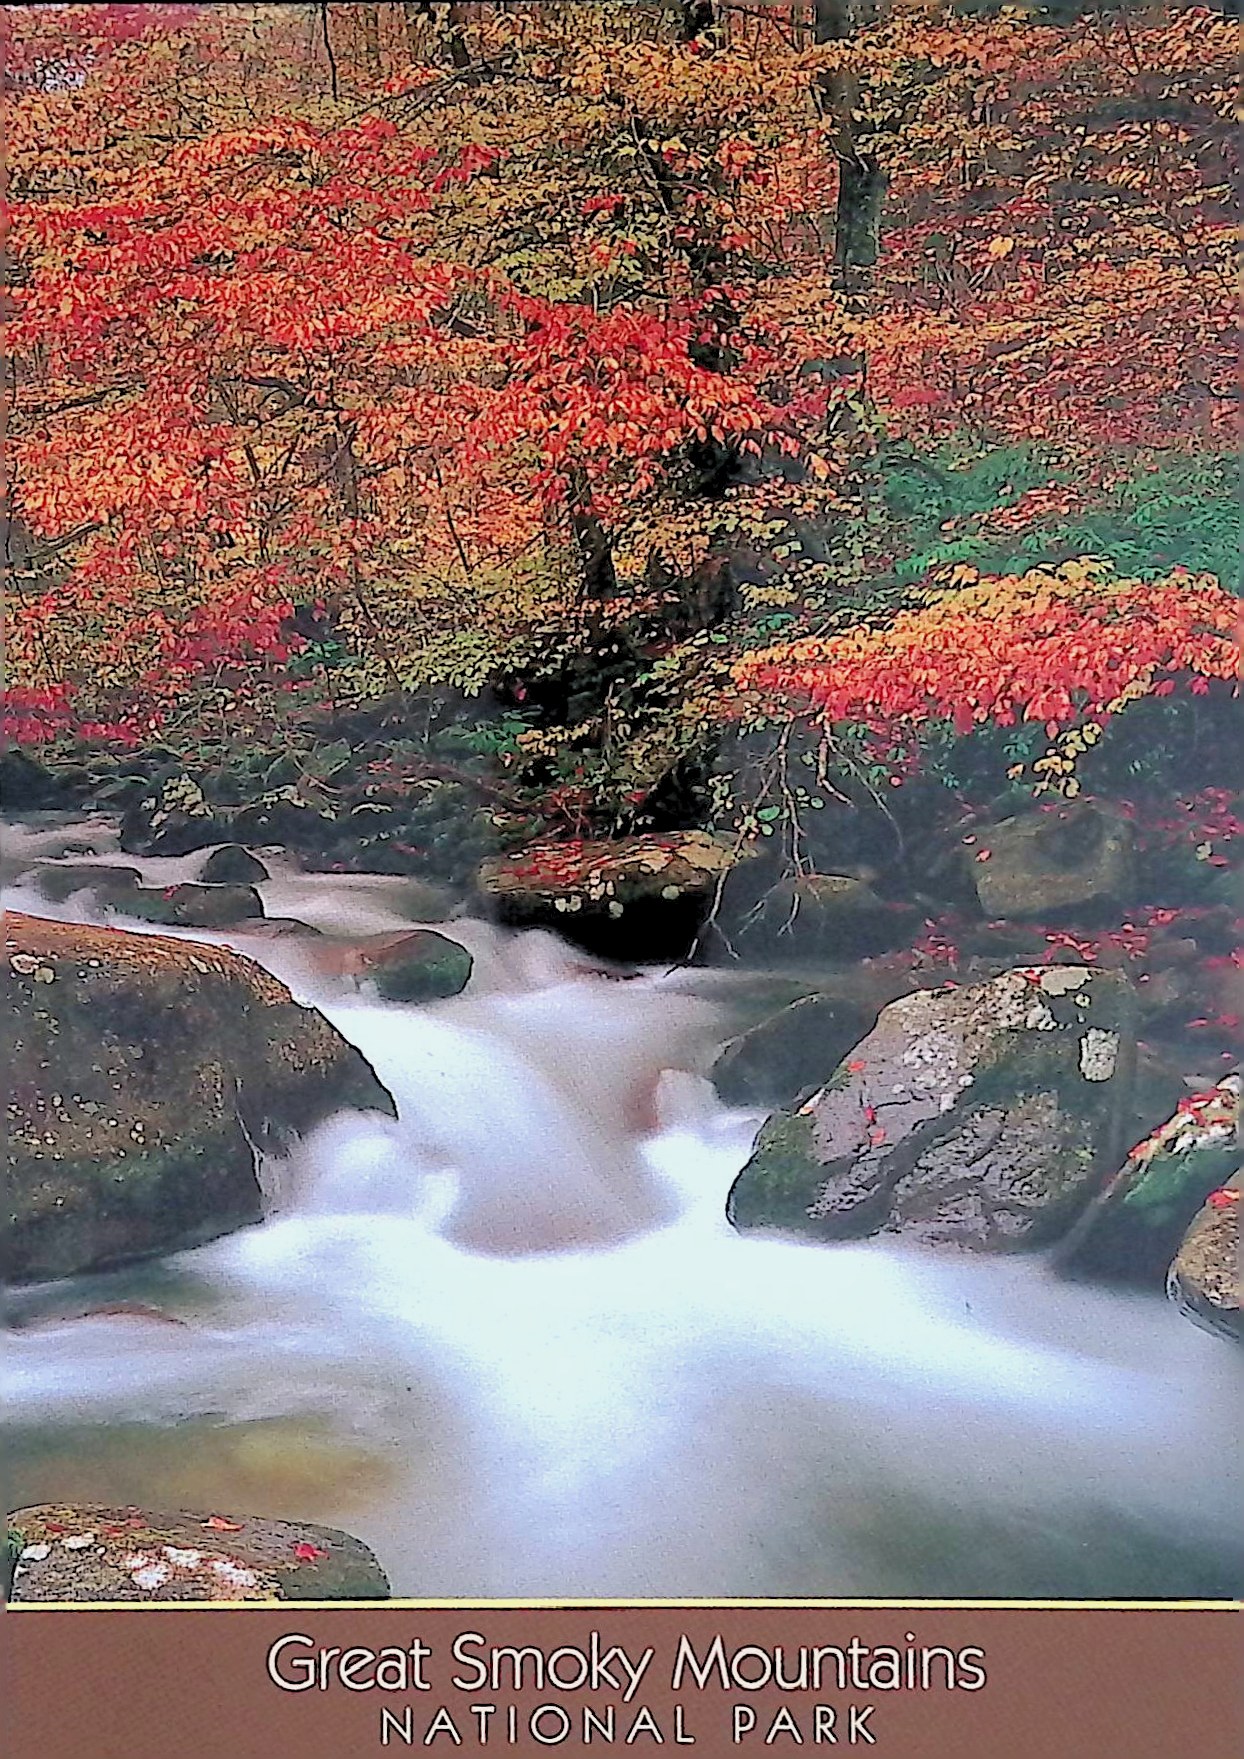 saj, Postcard US-8252565 Received, The Great Smoky Mountains, National Park (10 Mar 2022).jpg